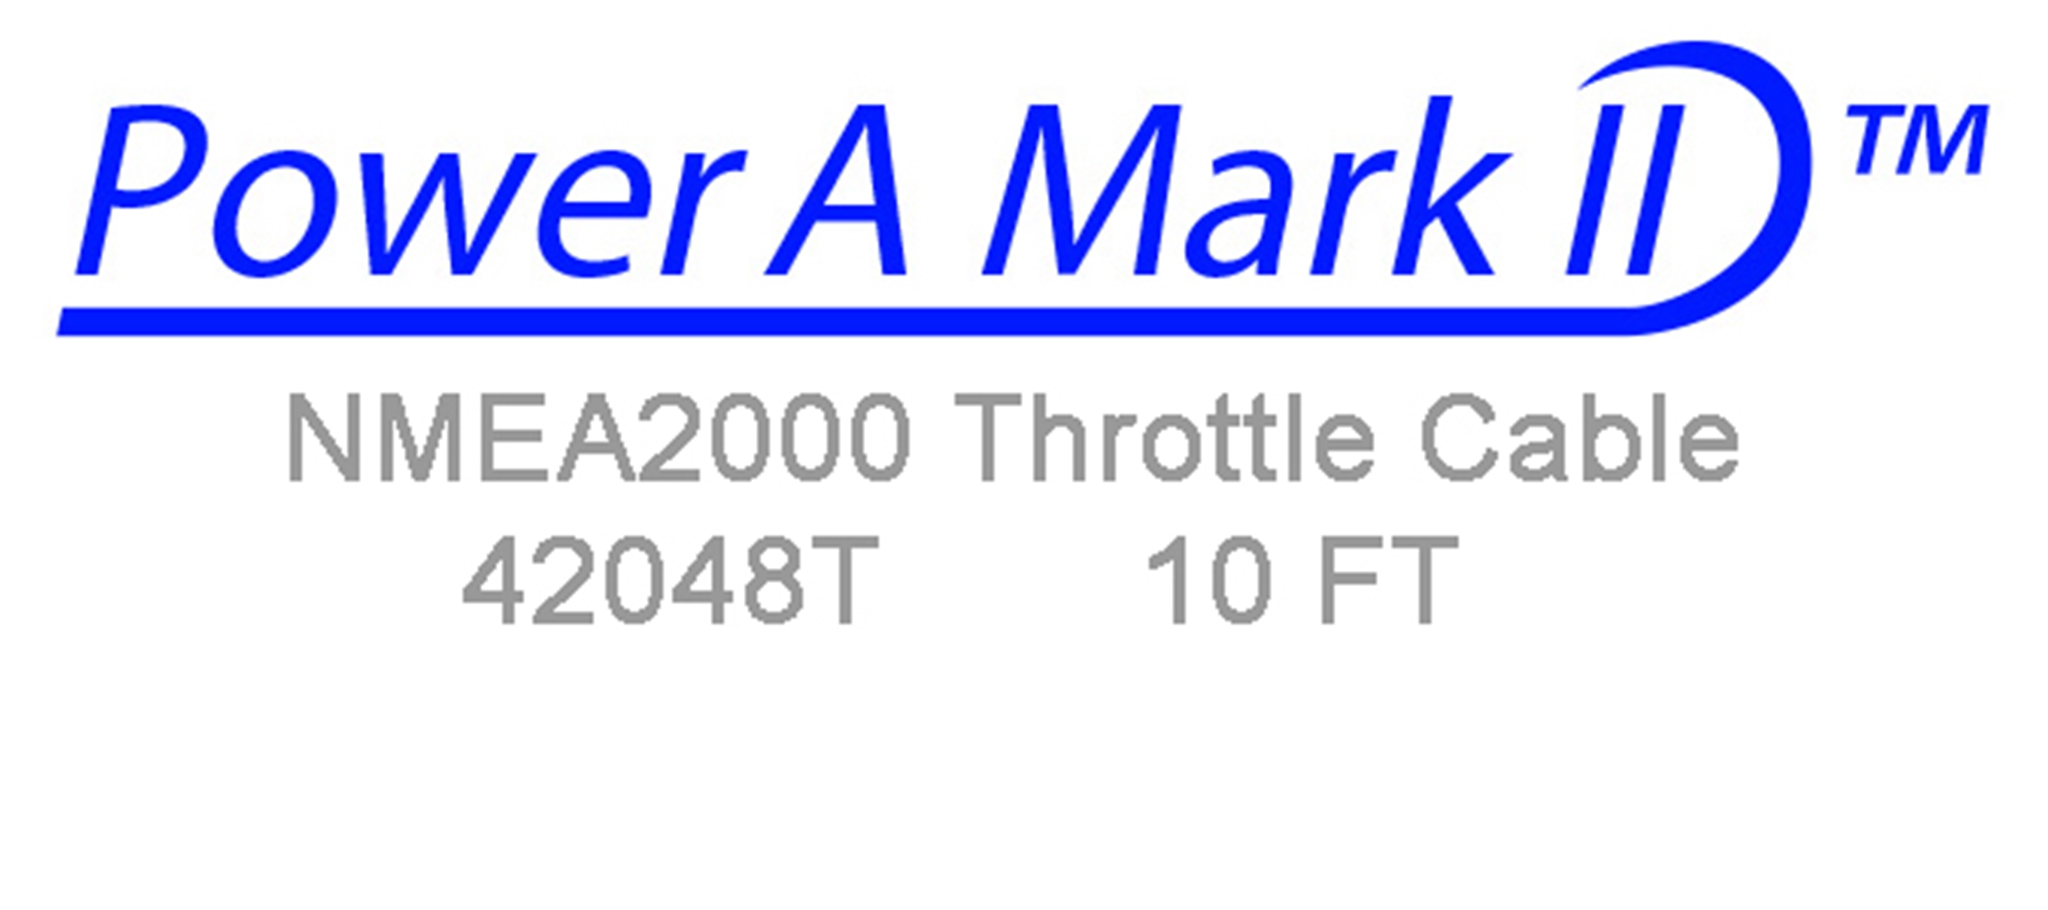 42048T NMEA 2000 Throttle Cable 10 Ft Length